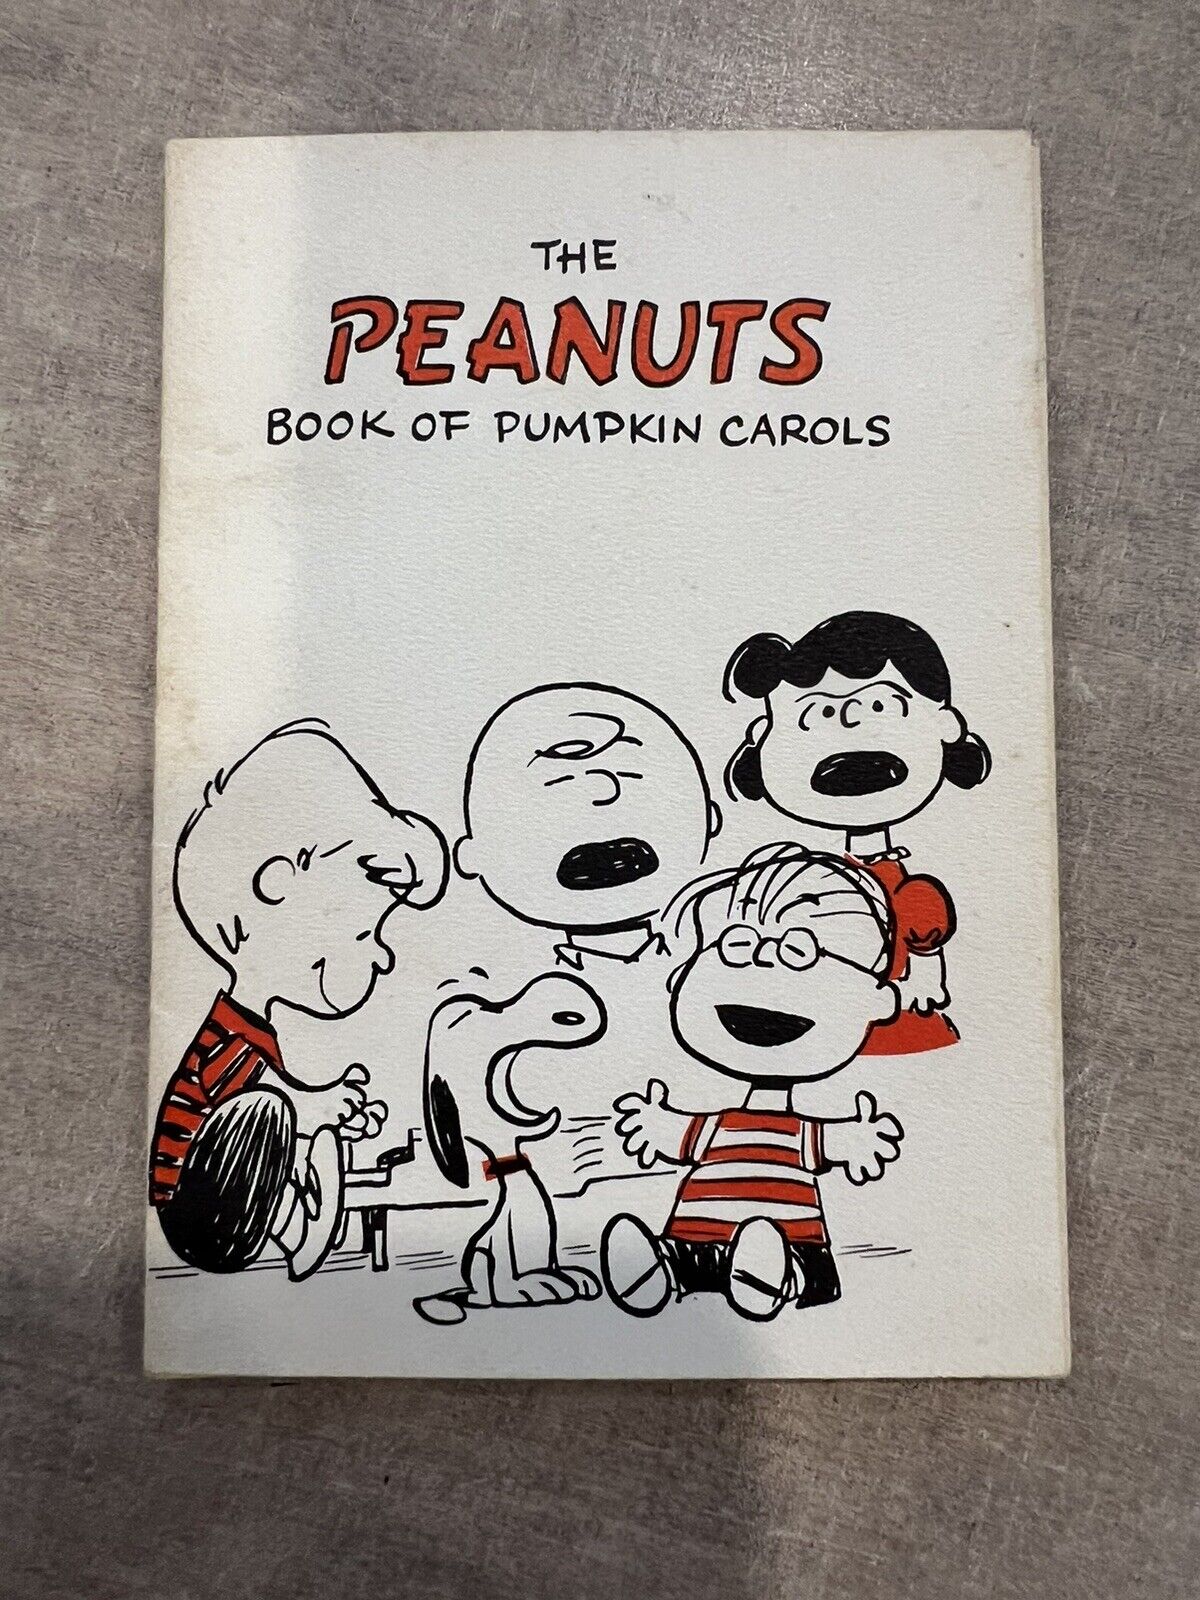 The Peanuts Book Of Pumpkin Carols - RARE VINTAGE early 1960’s Hallmark